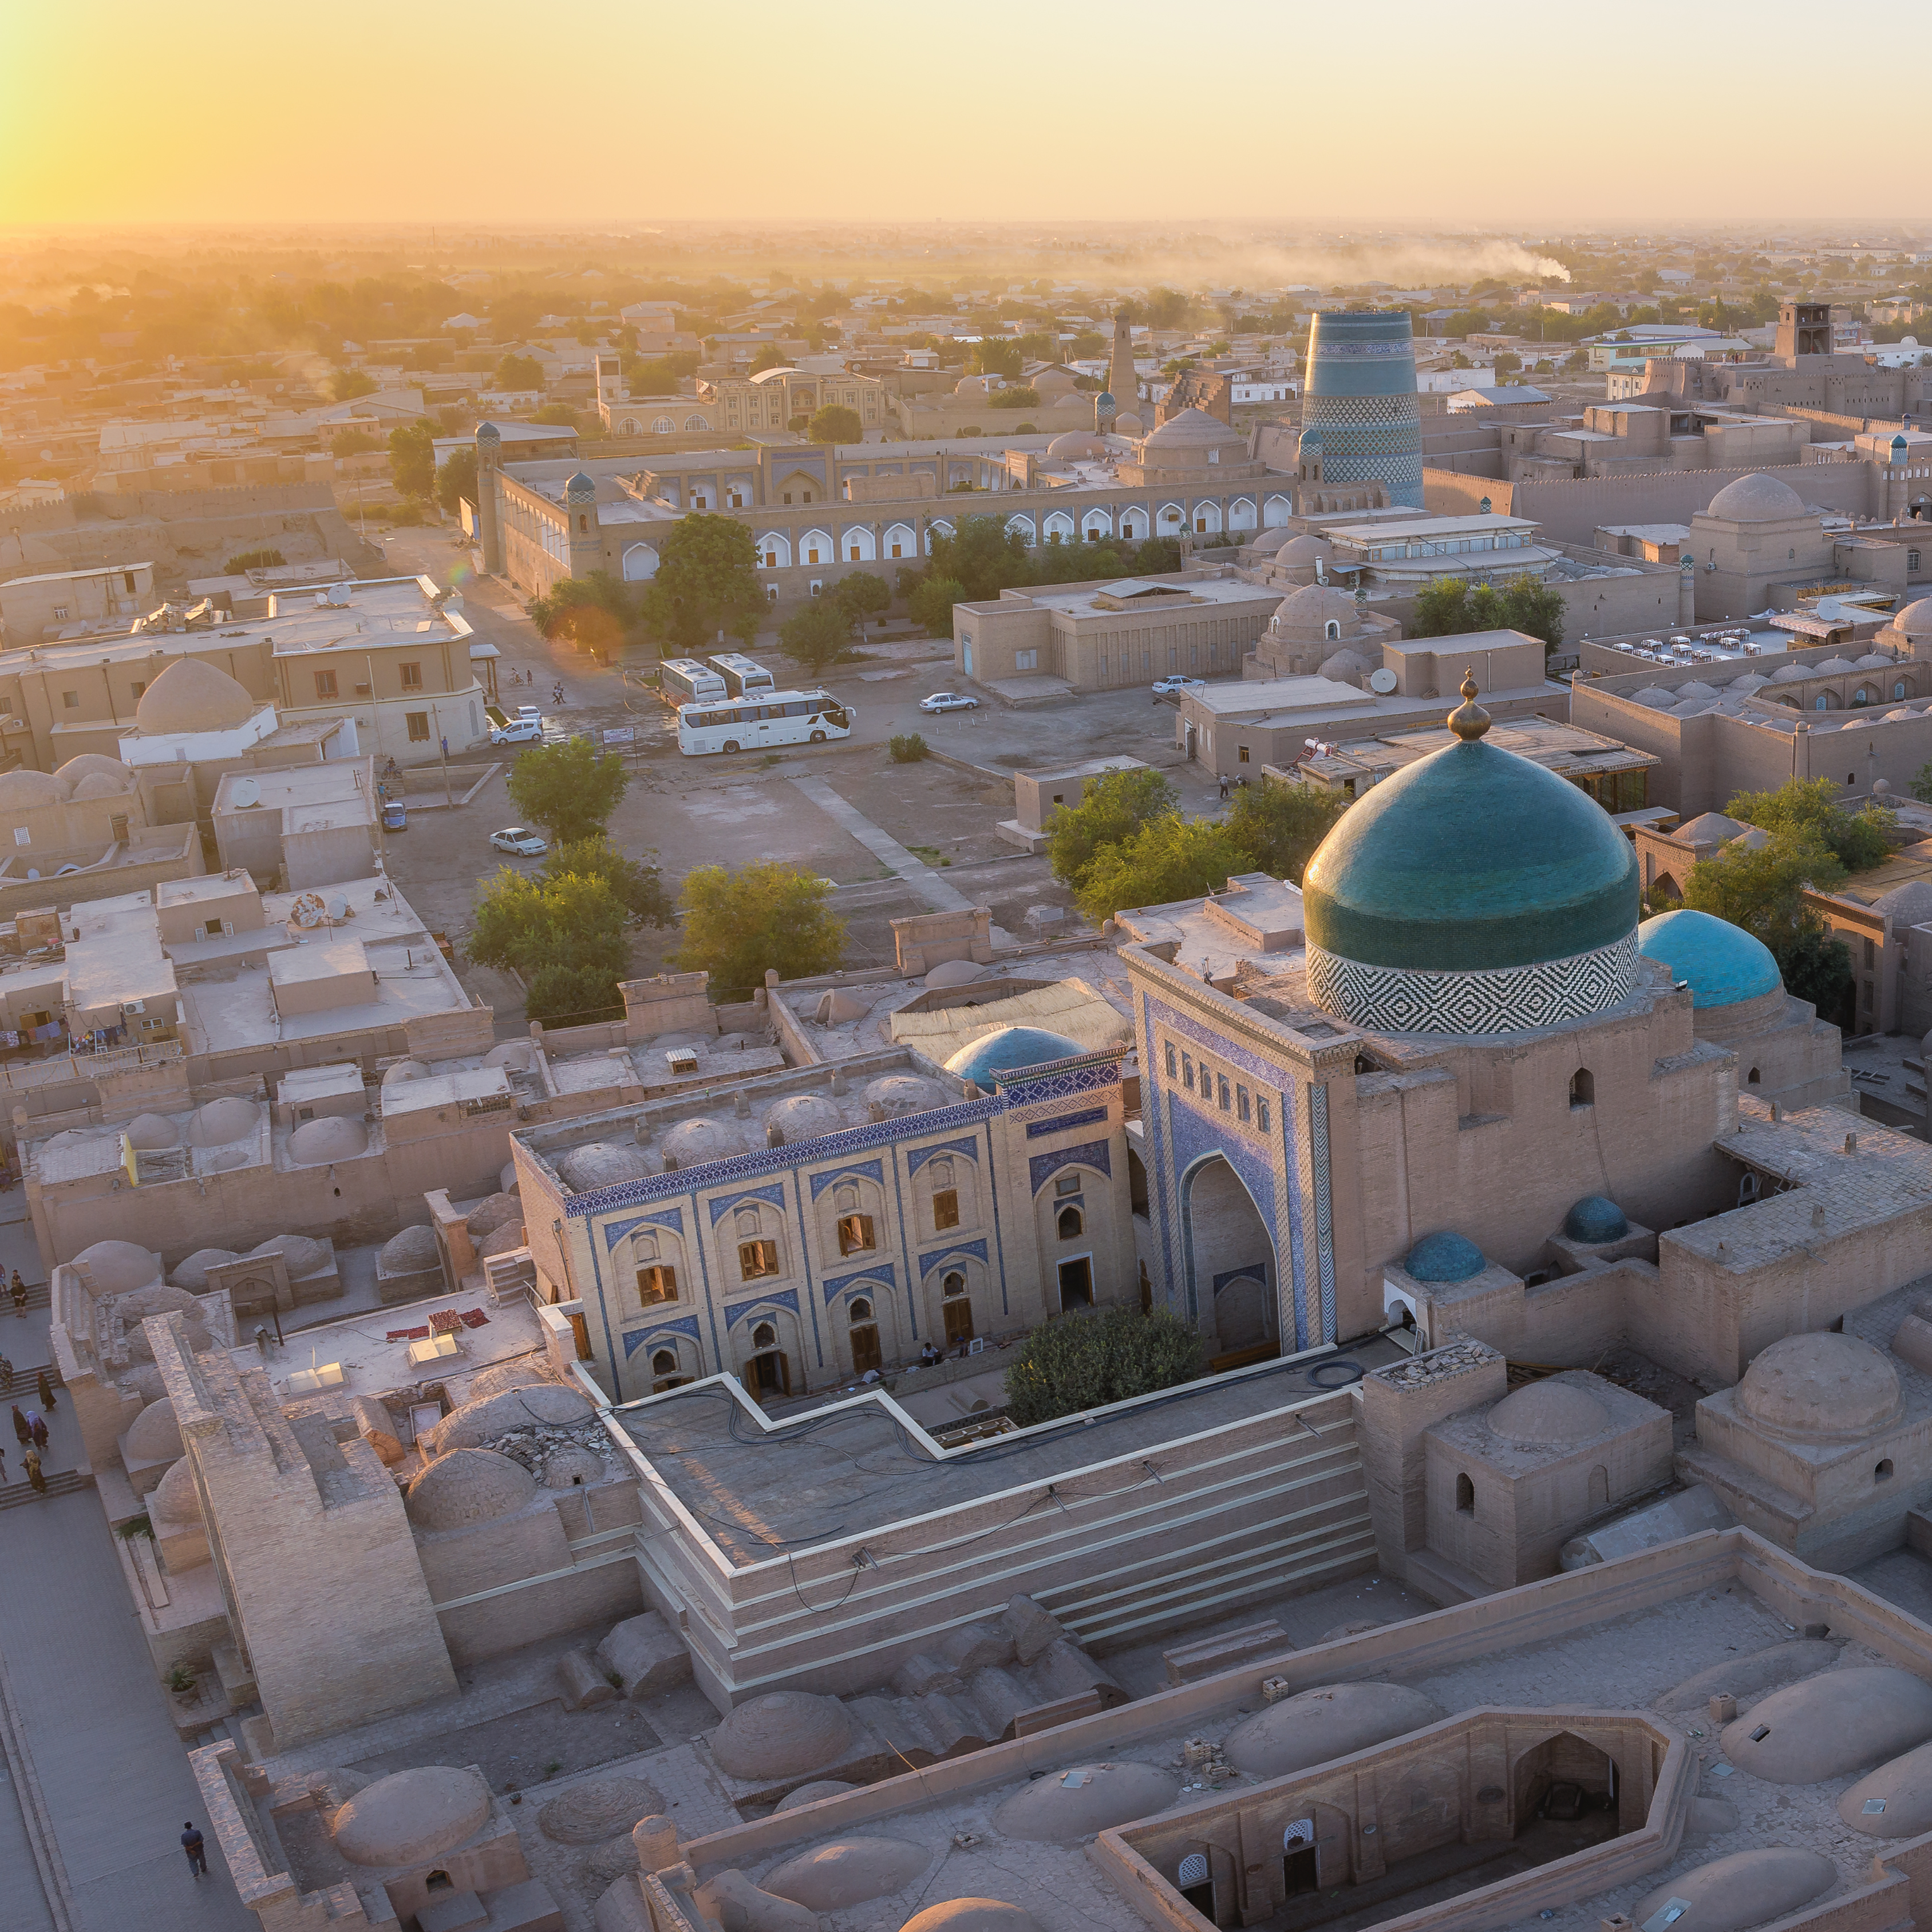 Explore the Rich Heritage of Uzbekistan on Our Classic Tour